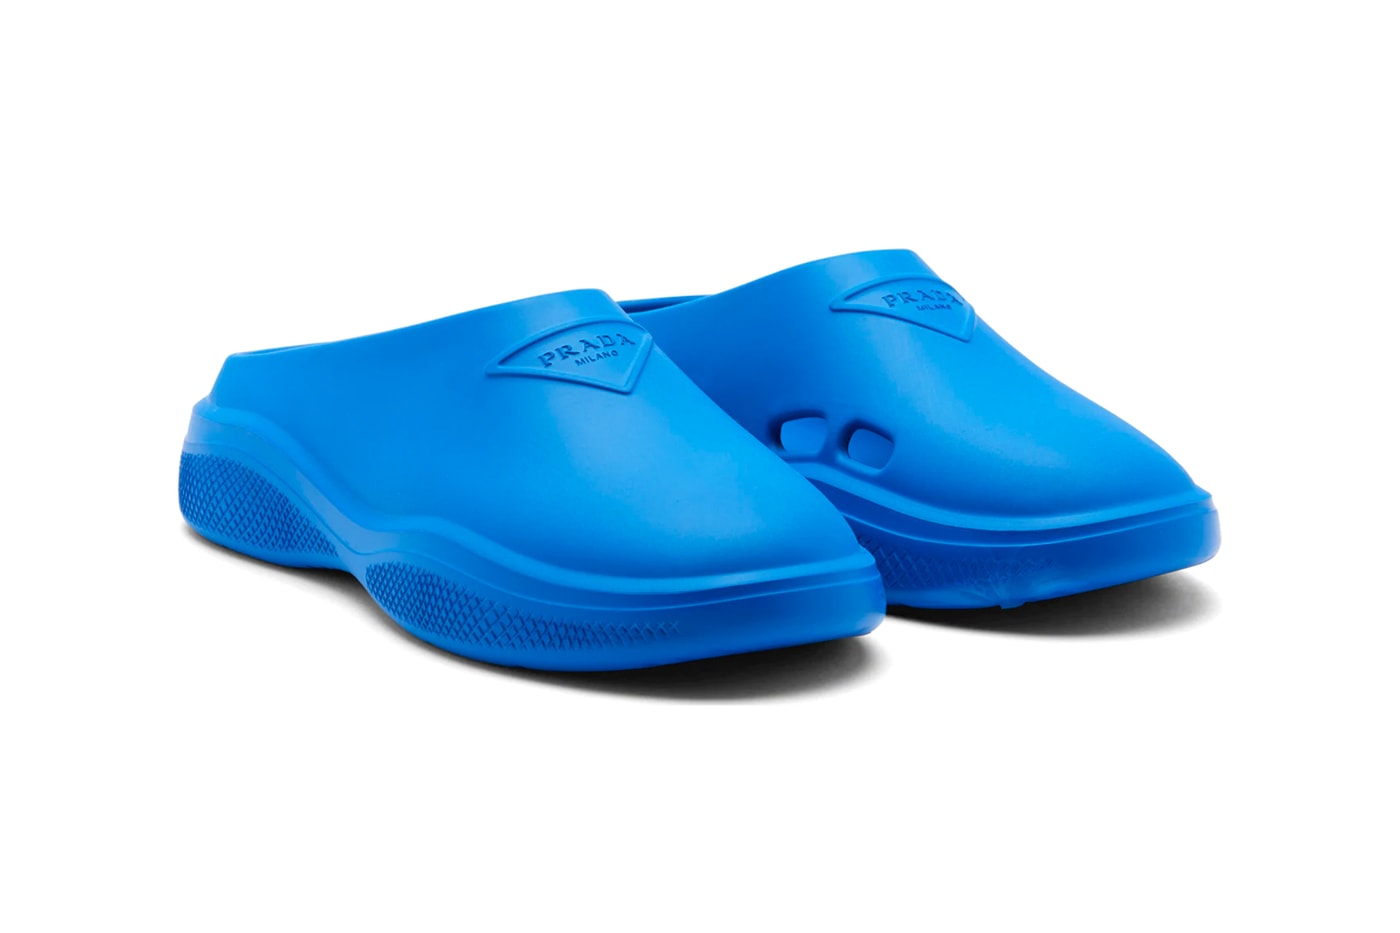 Prada’s Foam Rubber Mules Elevates Cozy Footwear